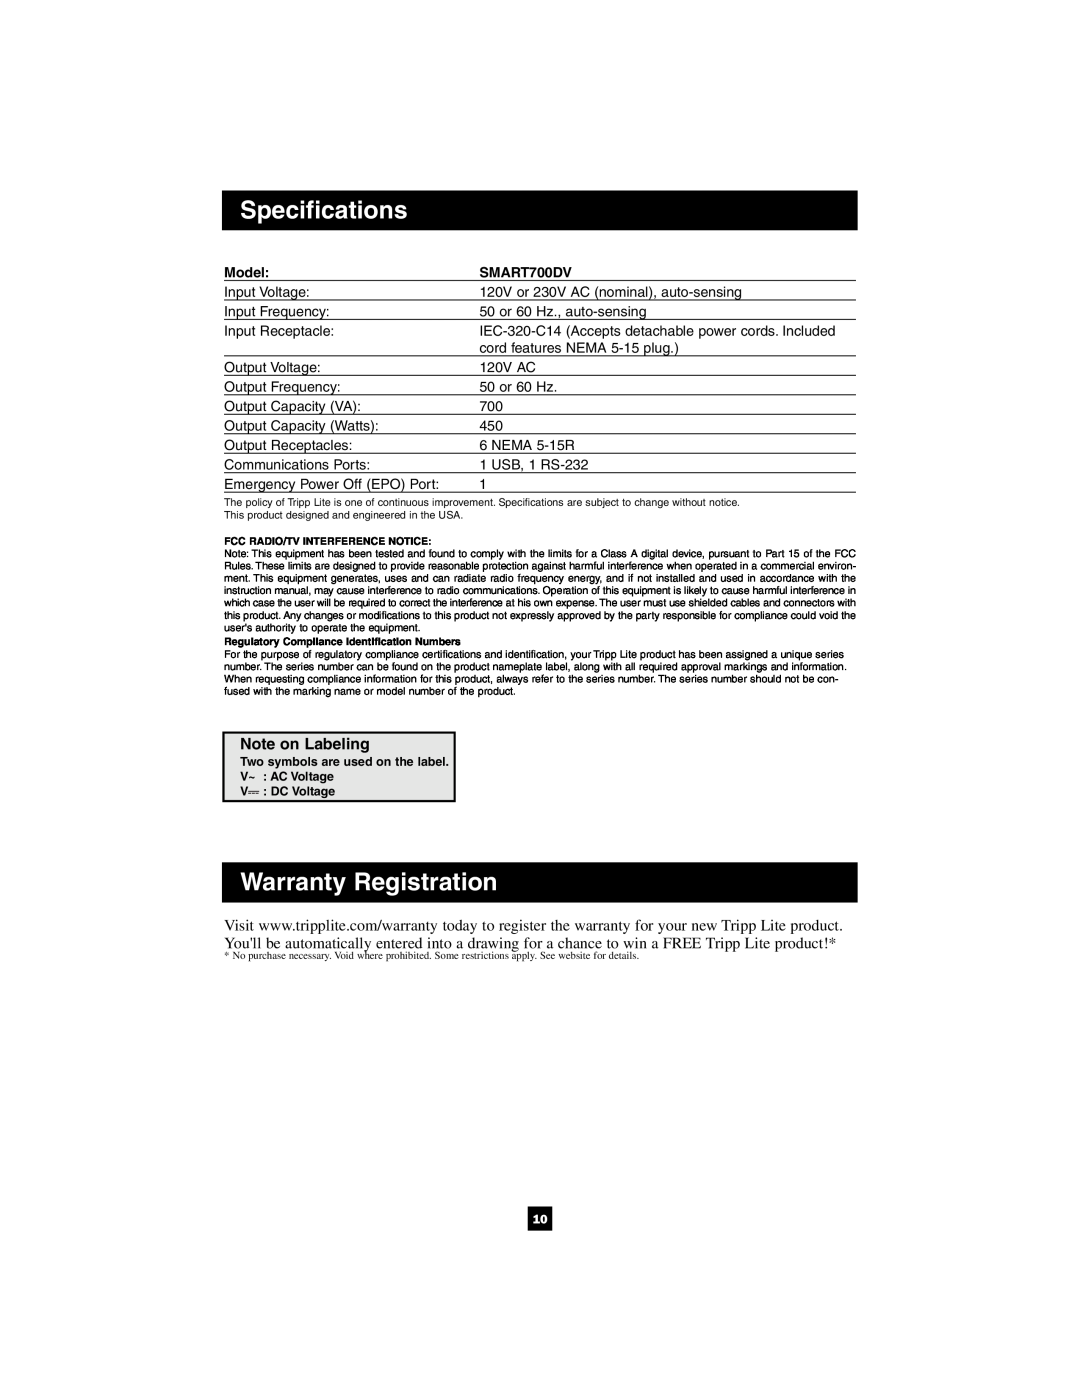 Tripp Lite SMART700DV owner manual Specifications, Warranty Registration, Note on Labeling, Model 